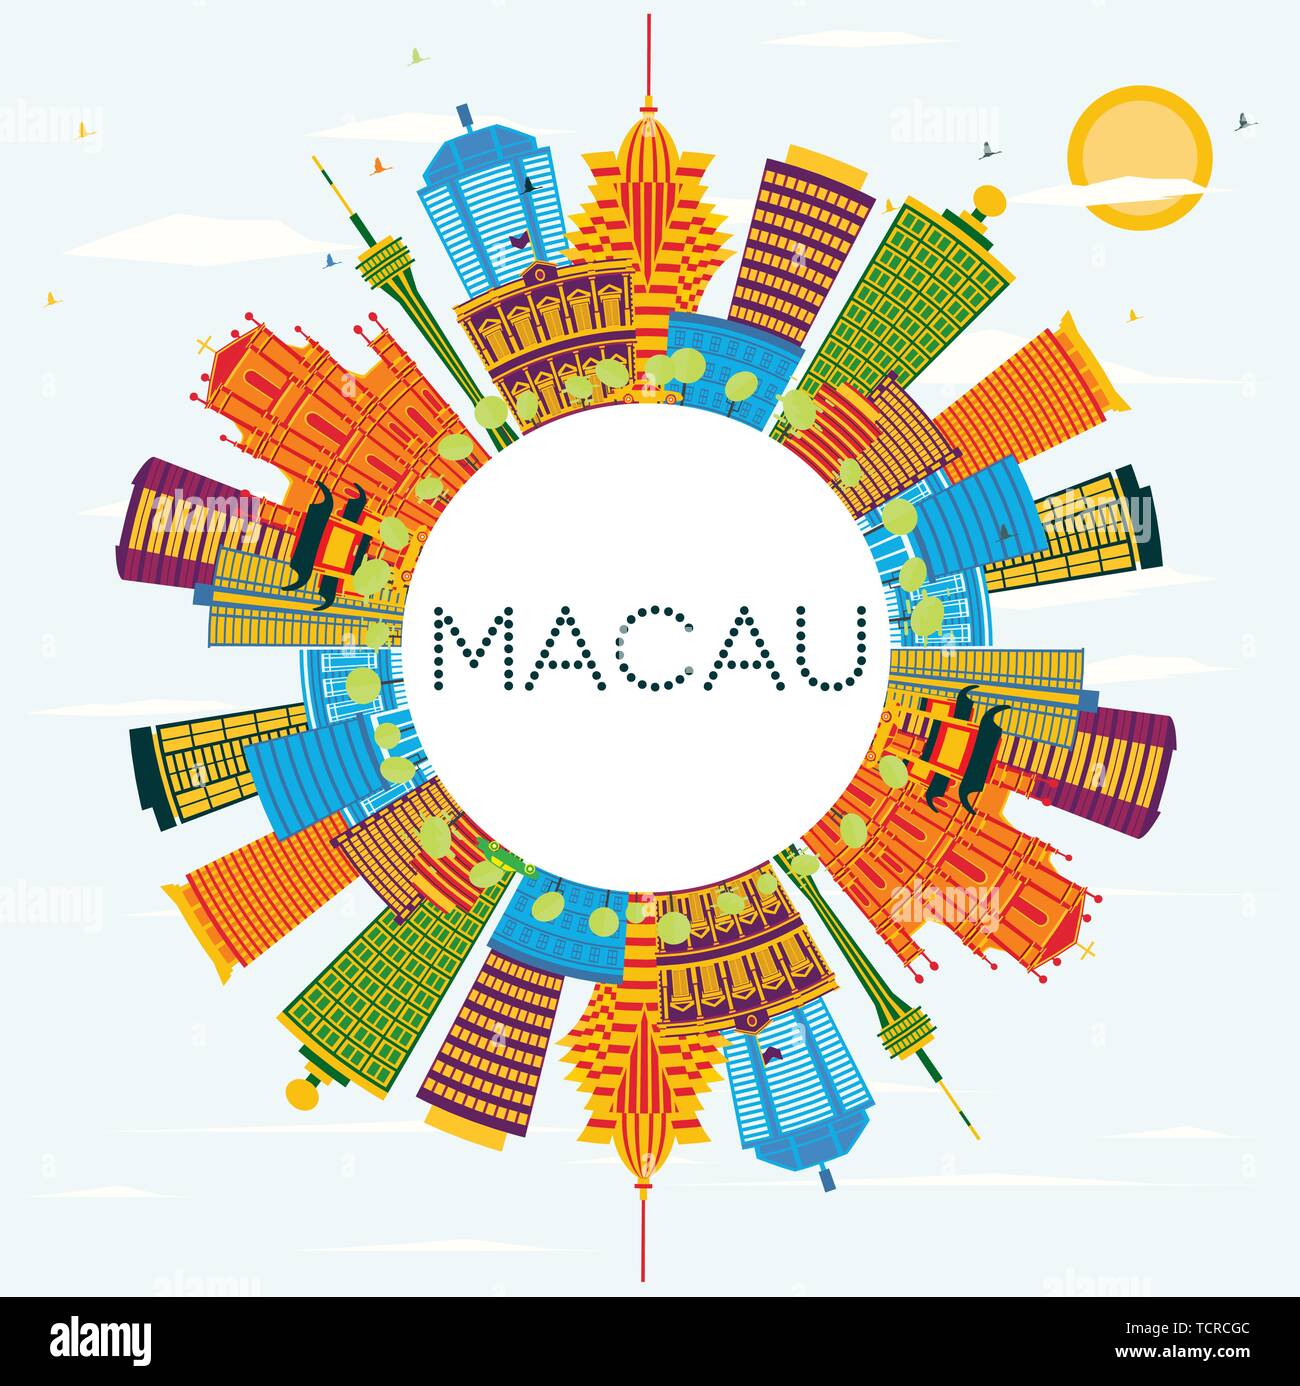 Macau tower Stock Vector Images - Alamy